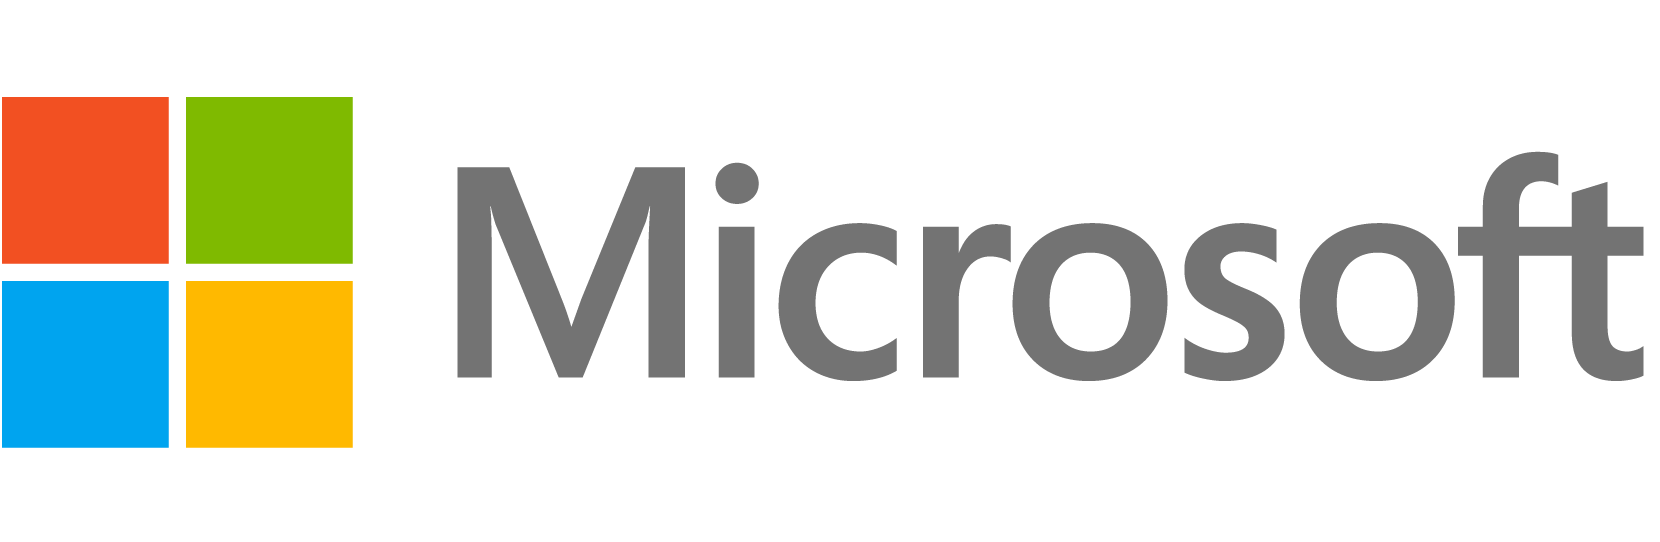 Microsoft logo links to webinar on demand